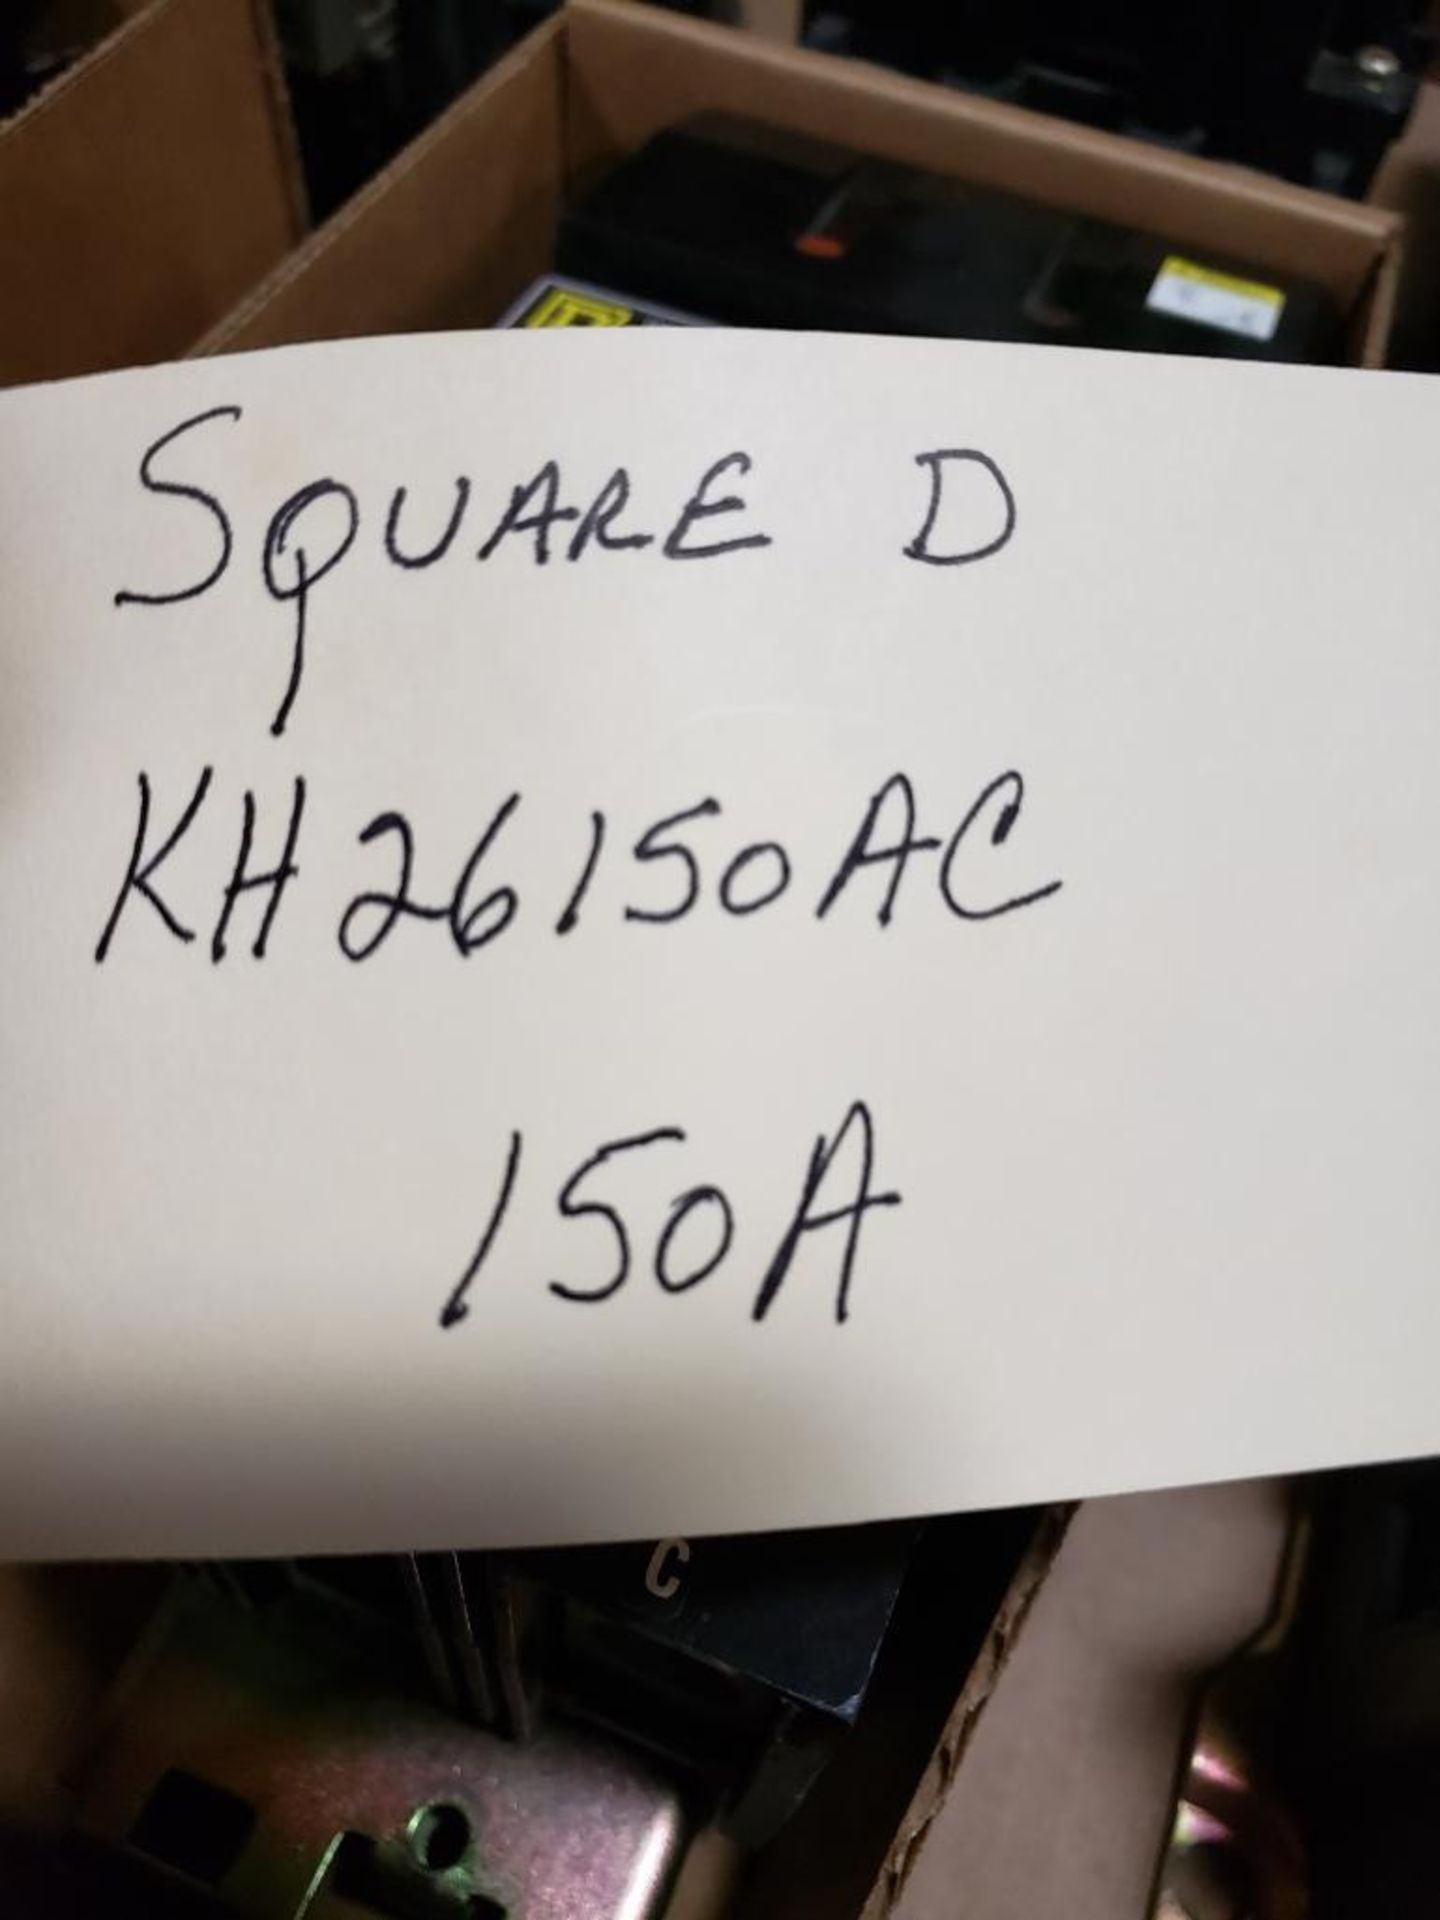 Square-D molded case circuit breaker KH26150AC. 150 Amp. - Image 2 of 3